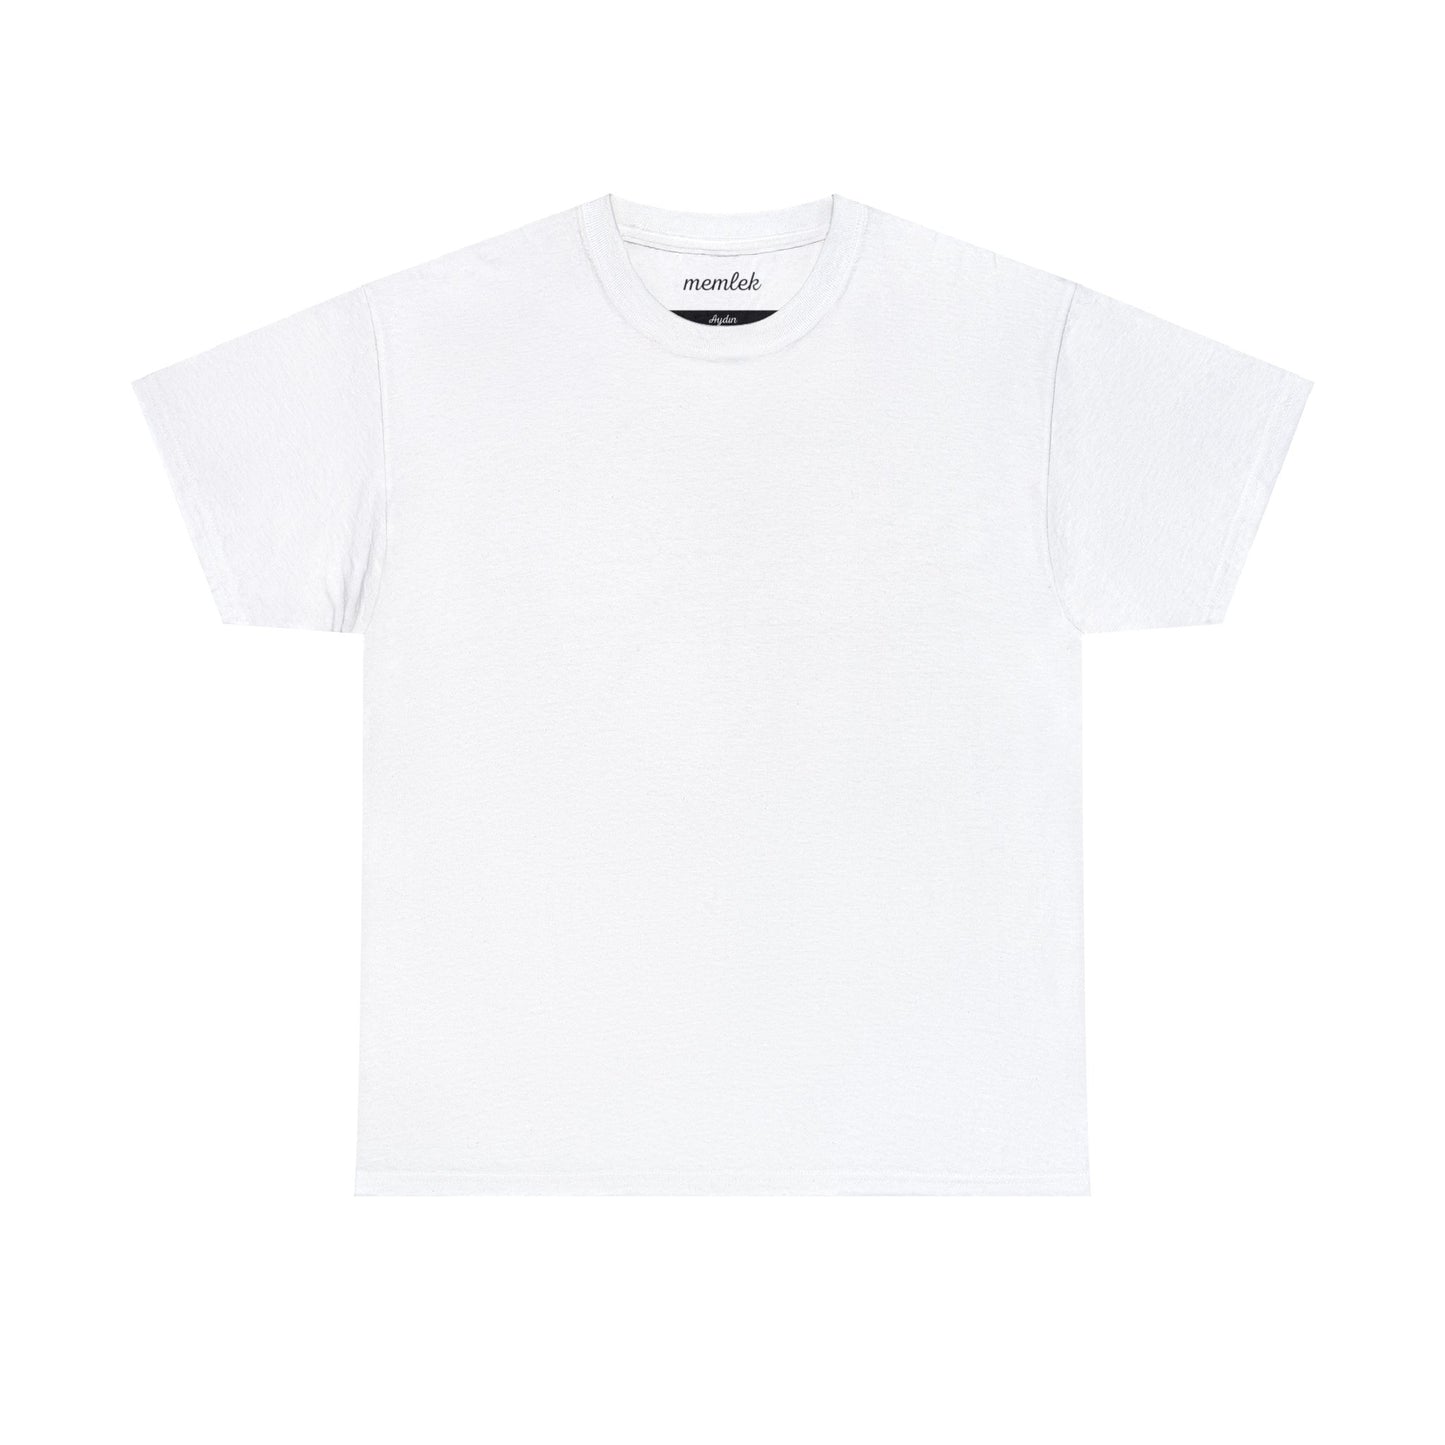 Kurt - 09 Aydın - T-Shirt - Back Print - Black/White